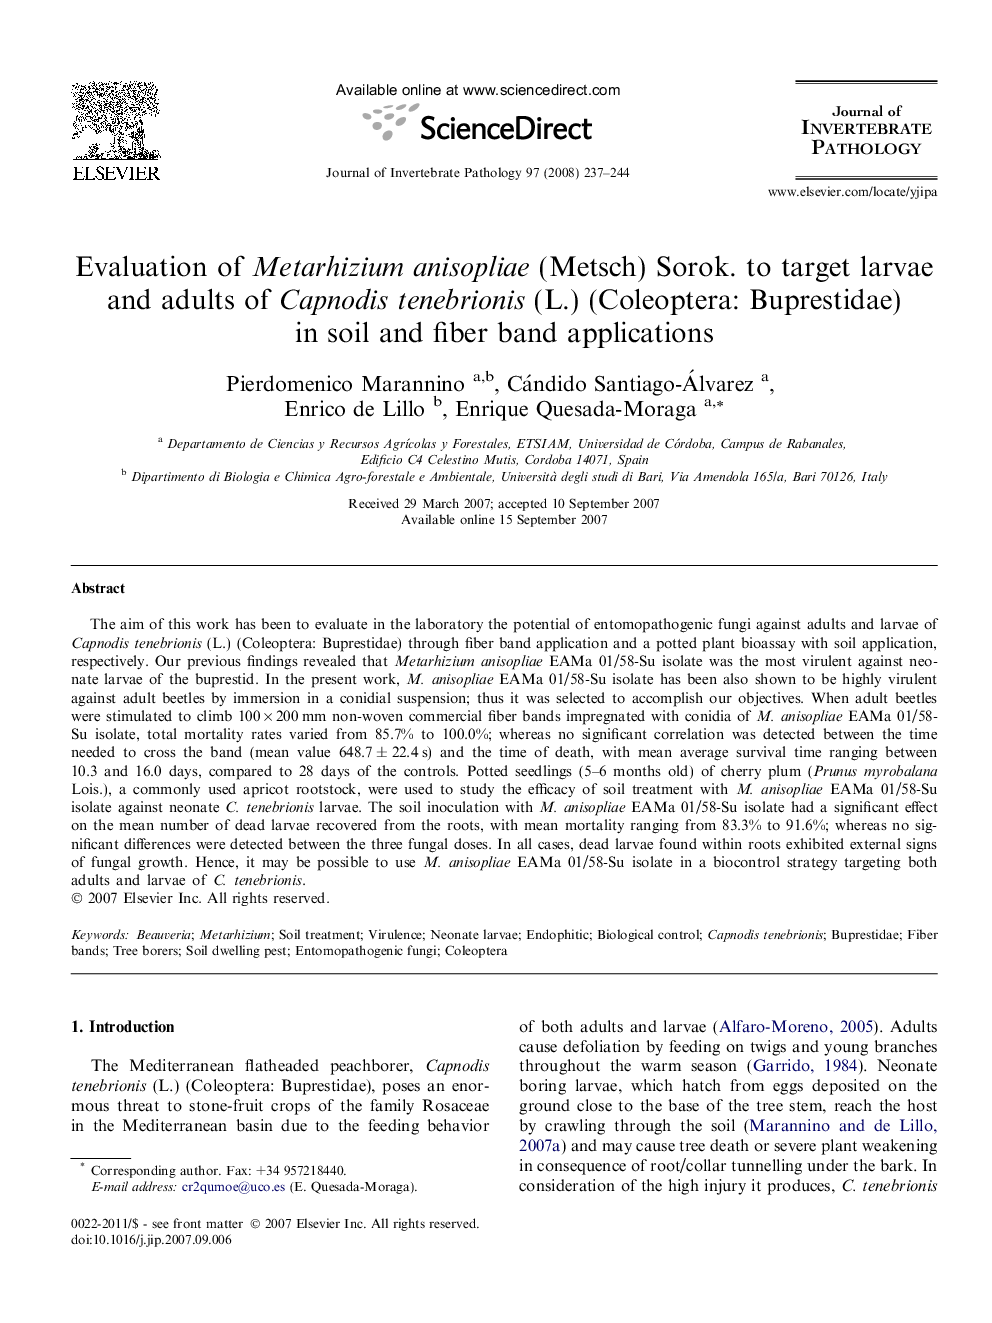 Evaluation of Metarhizium anisopliae (Metsch) Sorok. to target larvae and adults of Capnodis tenebrionis (L.) (Coleoptera: Buprestidae) in soil and fiber band applications